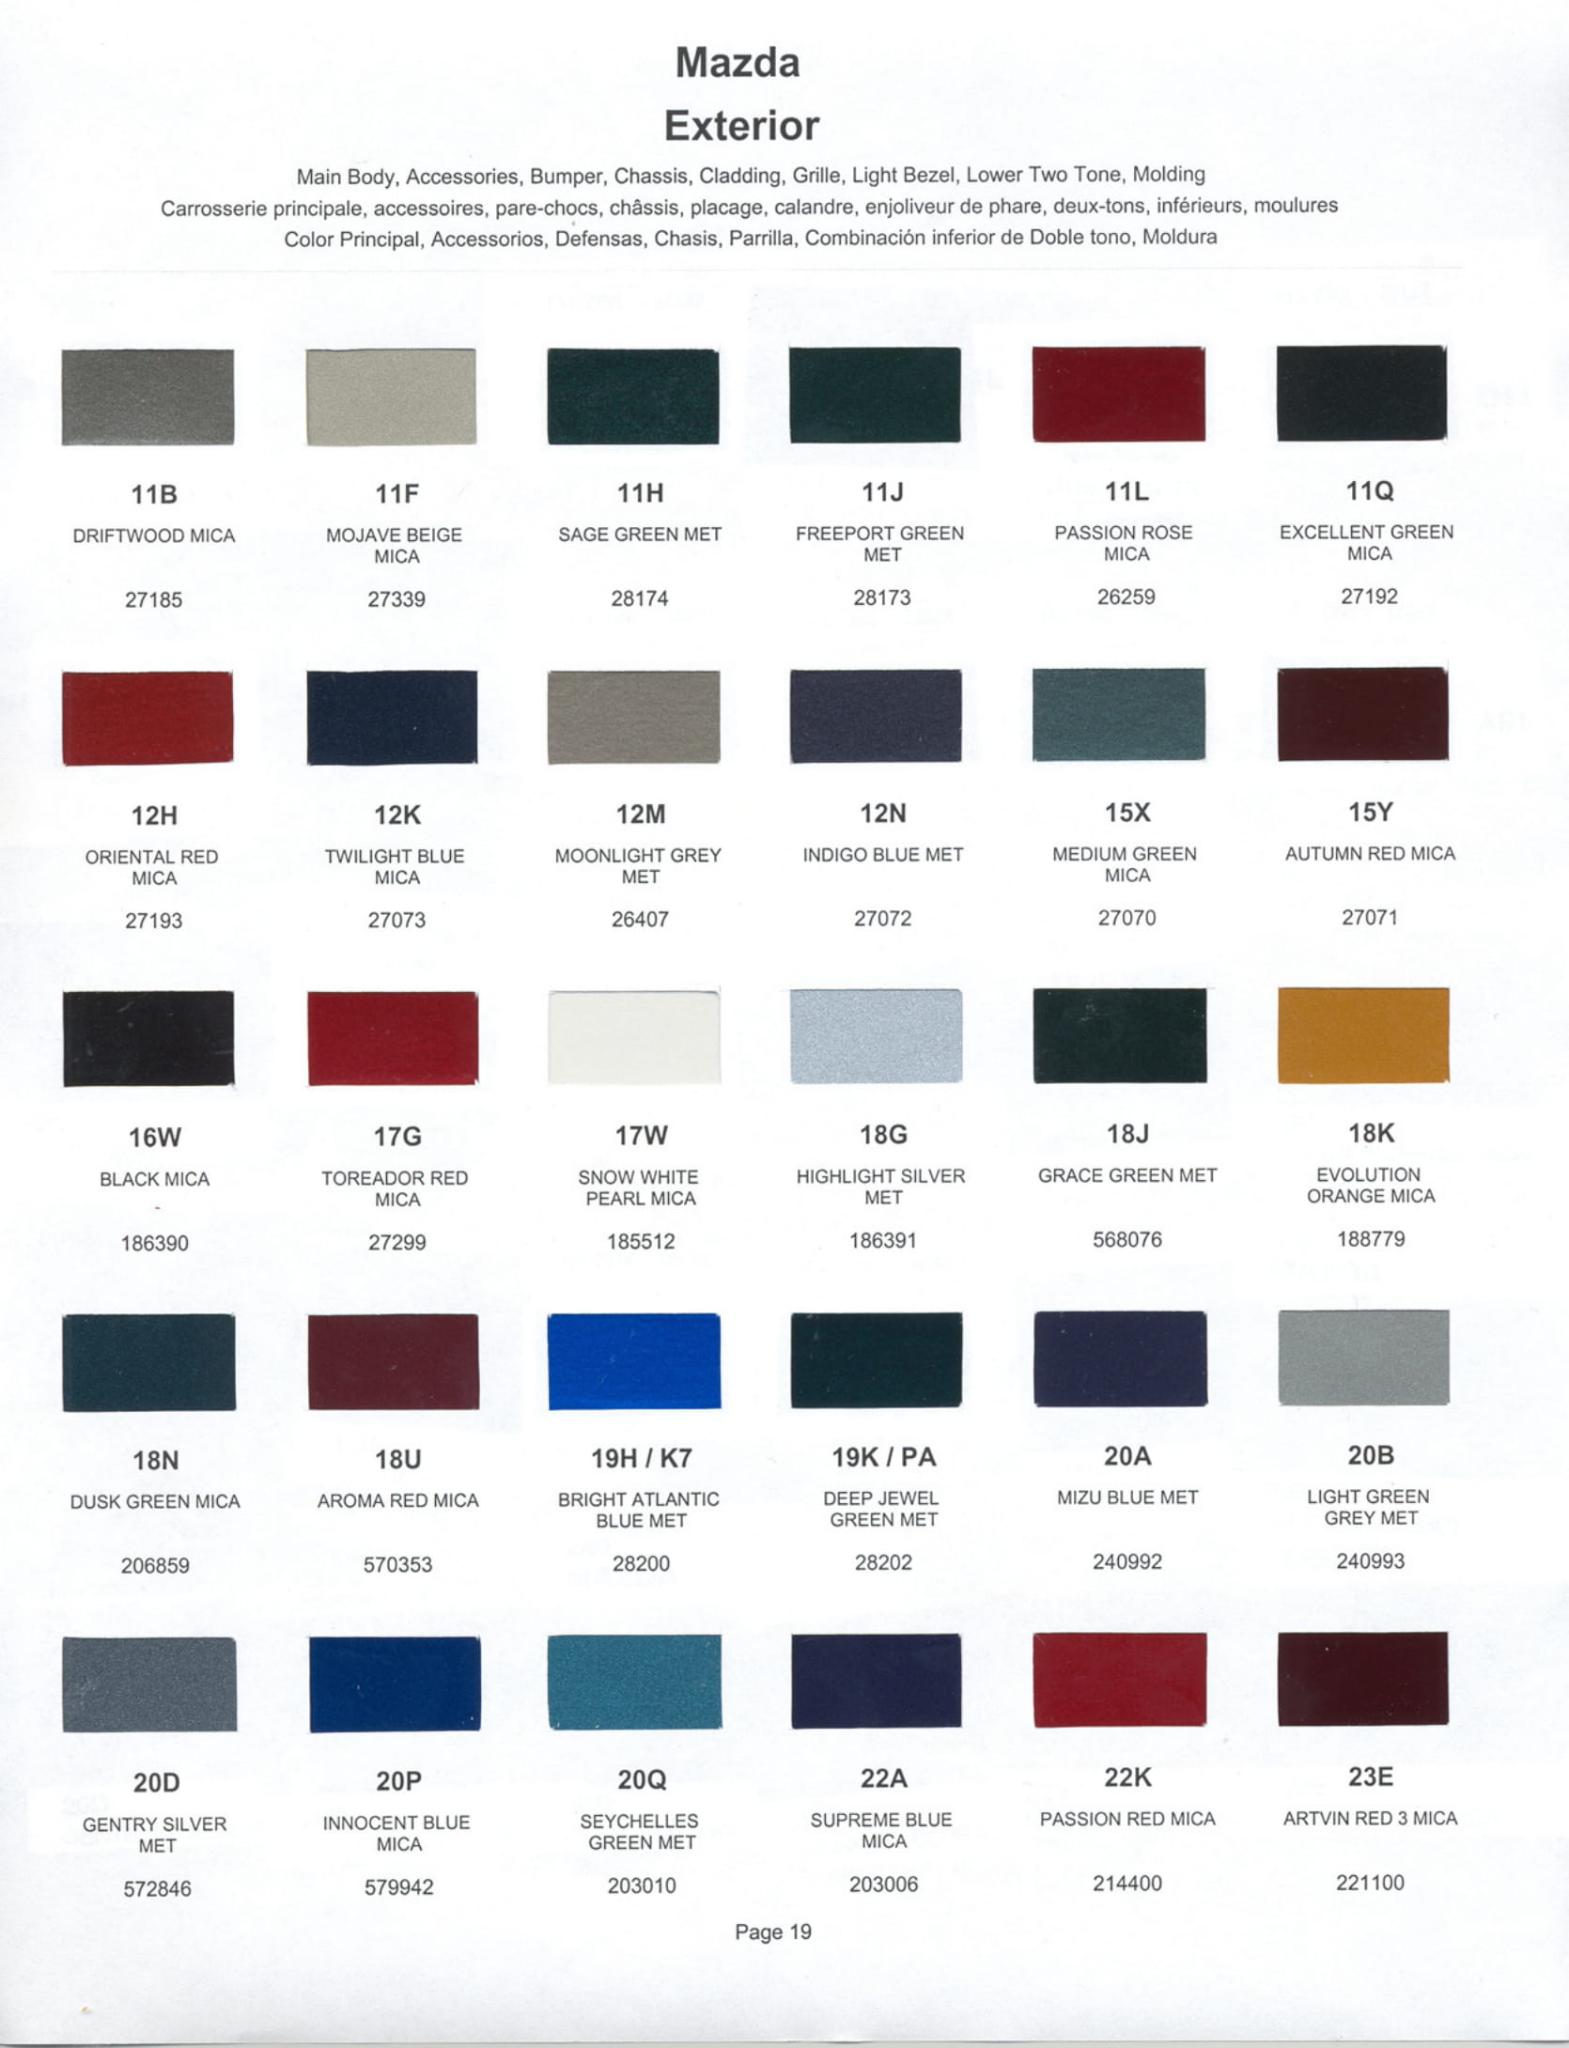 Mazda Paint Codes & Color Charts